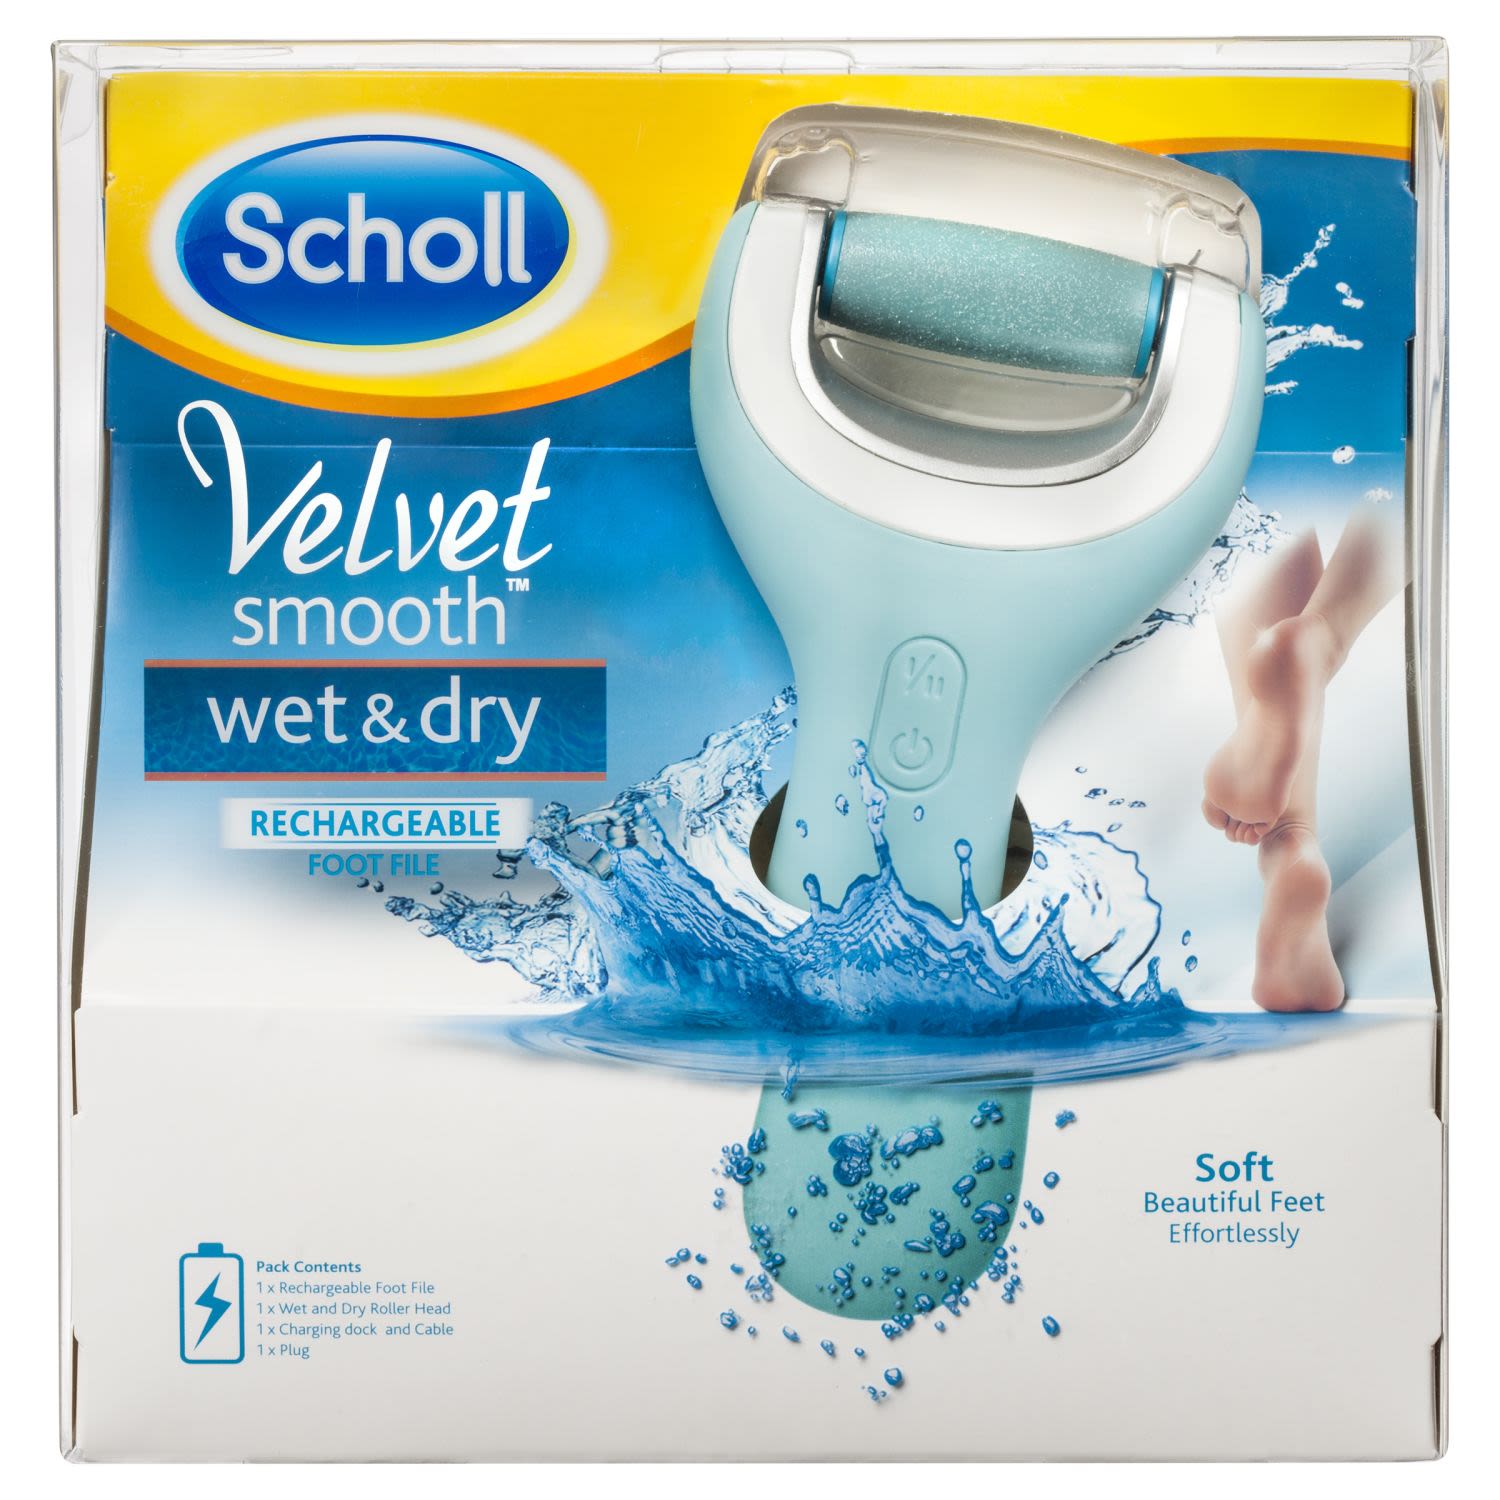 Scholl Velvet Smooth Wet & Dry Express Pedi Foot File, 1 Each